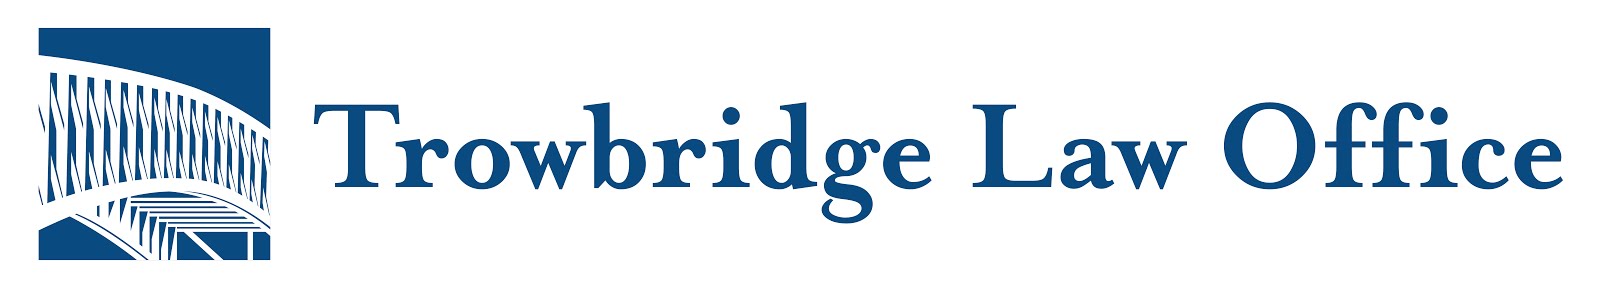 Trowbridge Law Office Blog